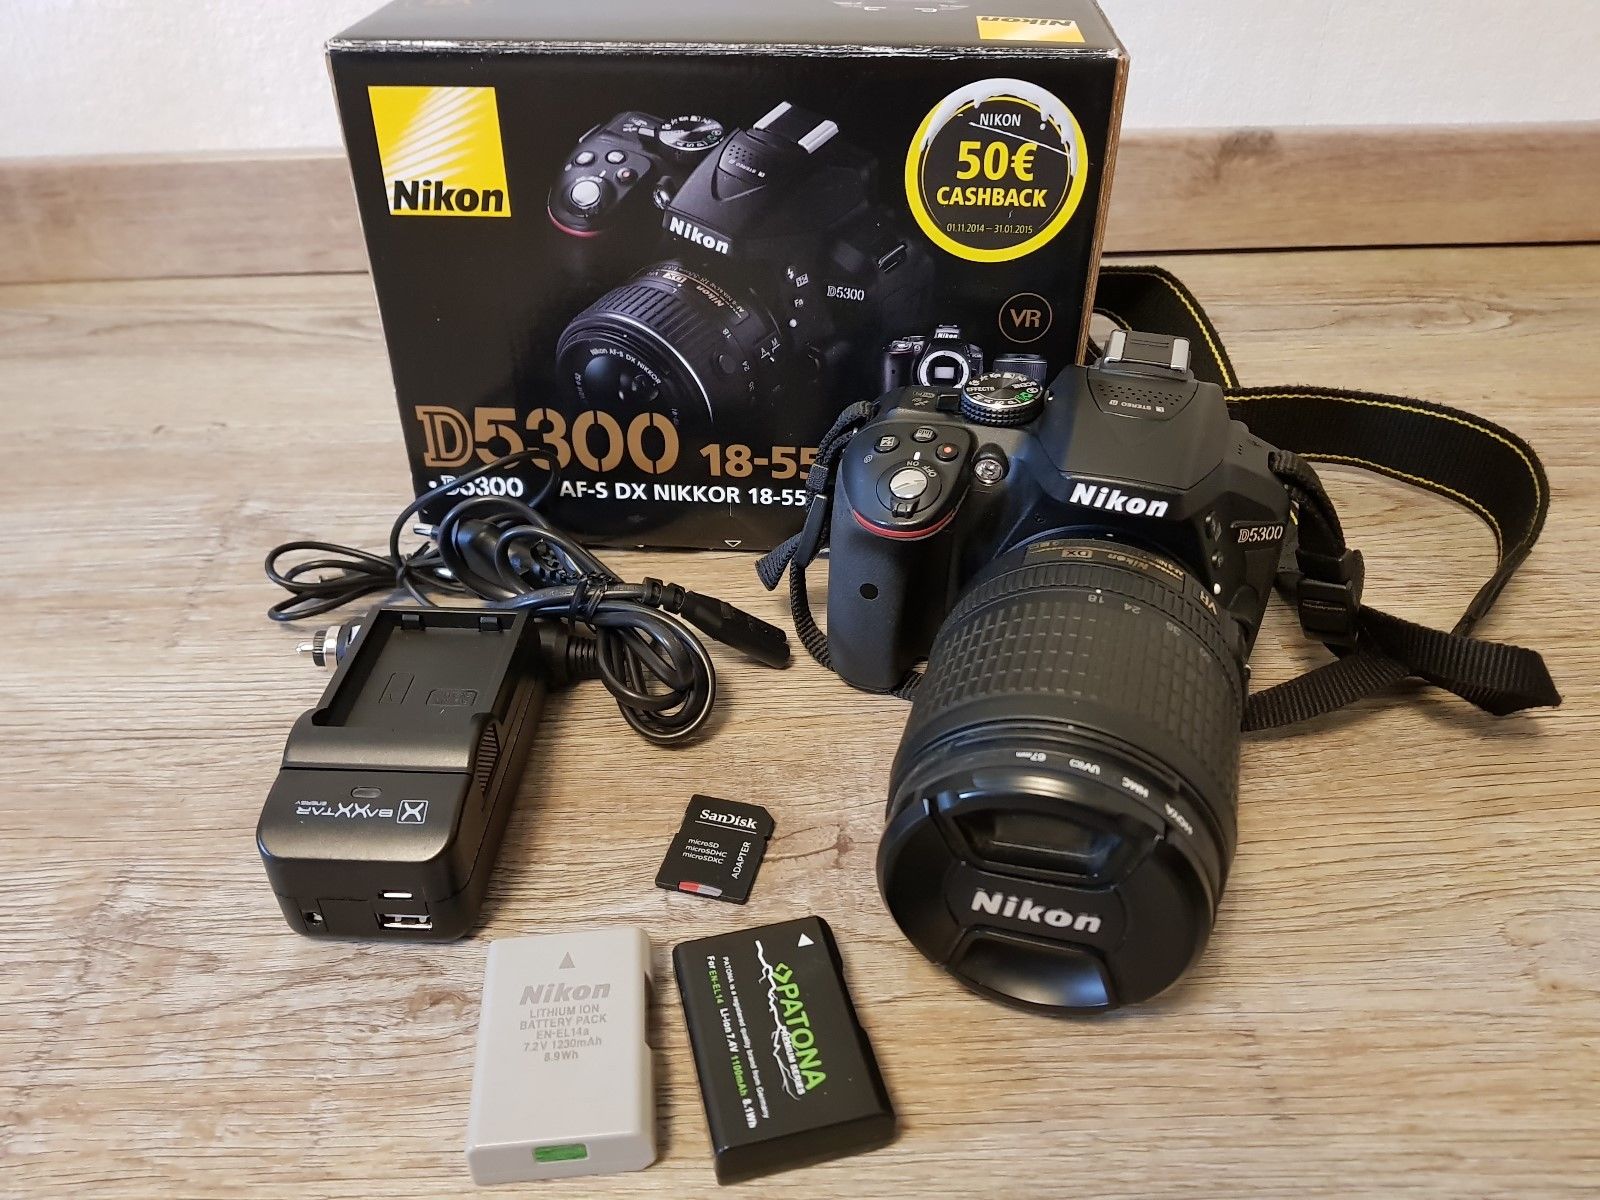  Nikon-D5300-DSLR-Kamera-mit-Nikkor-18-105-mm-Objektiv-Tasche-Zubehörpaket